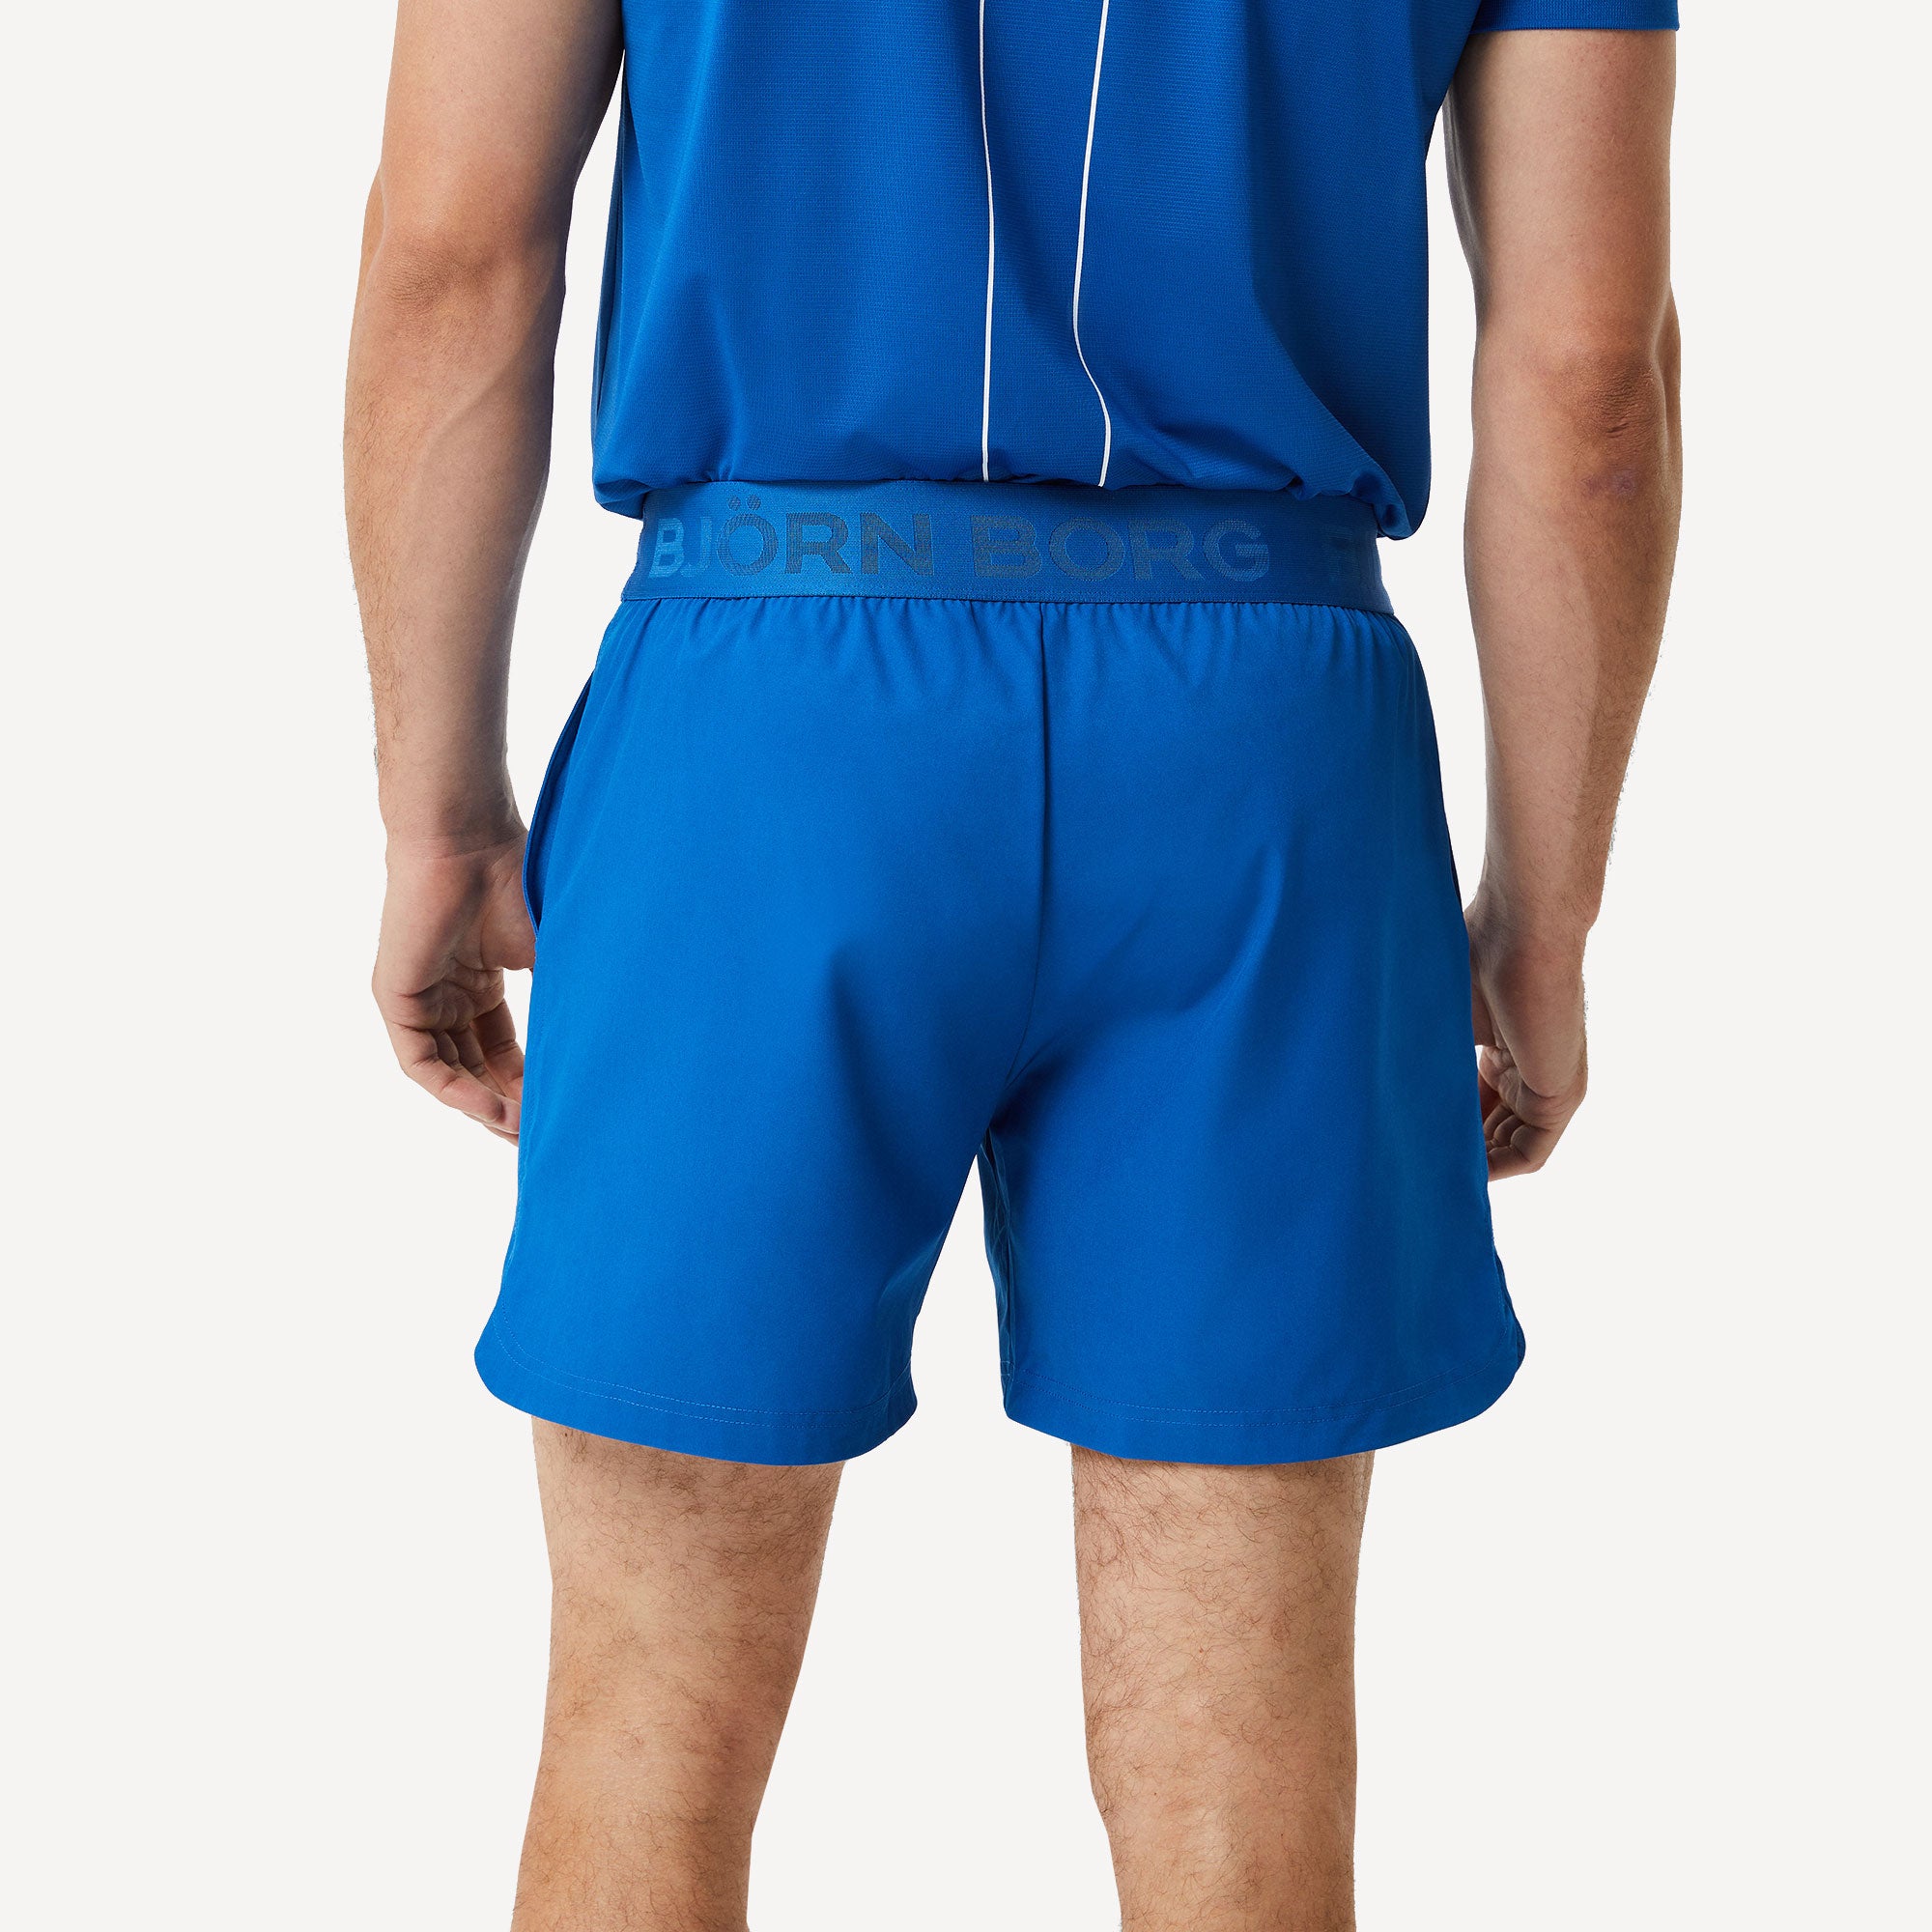 Björn Borg Ace Men's Short Tennis Shorts - Blue (2)